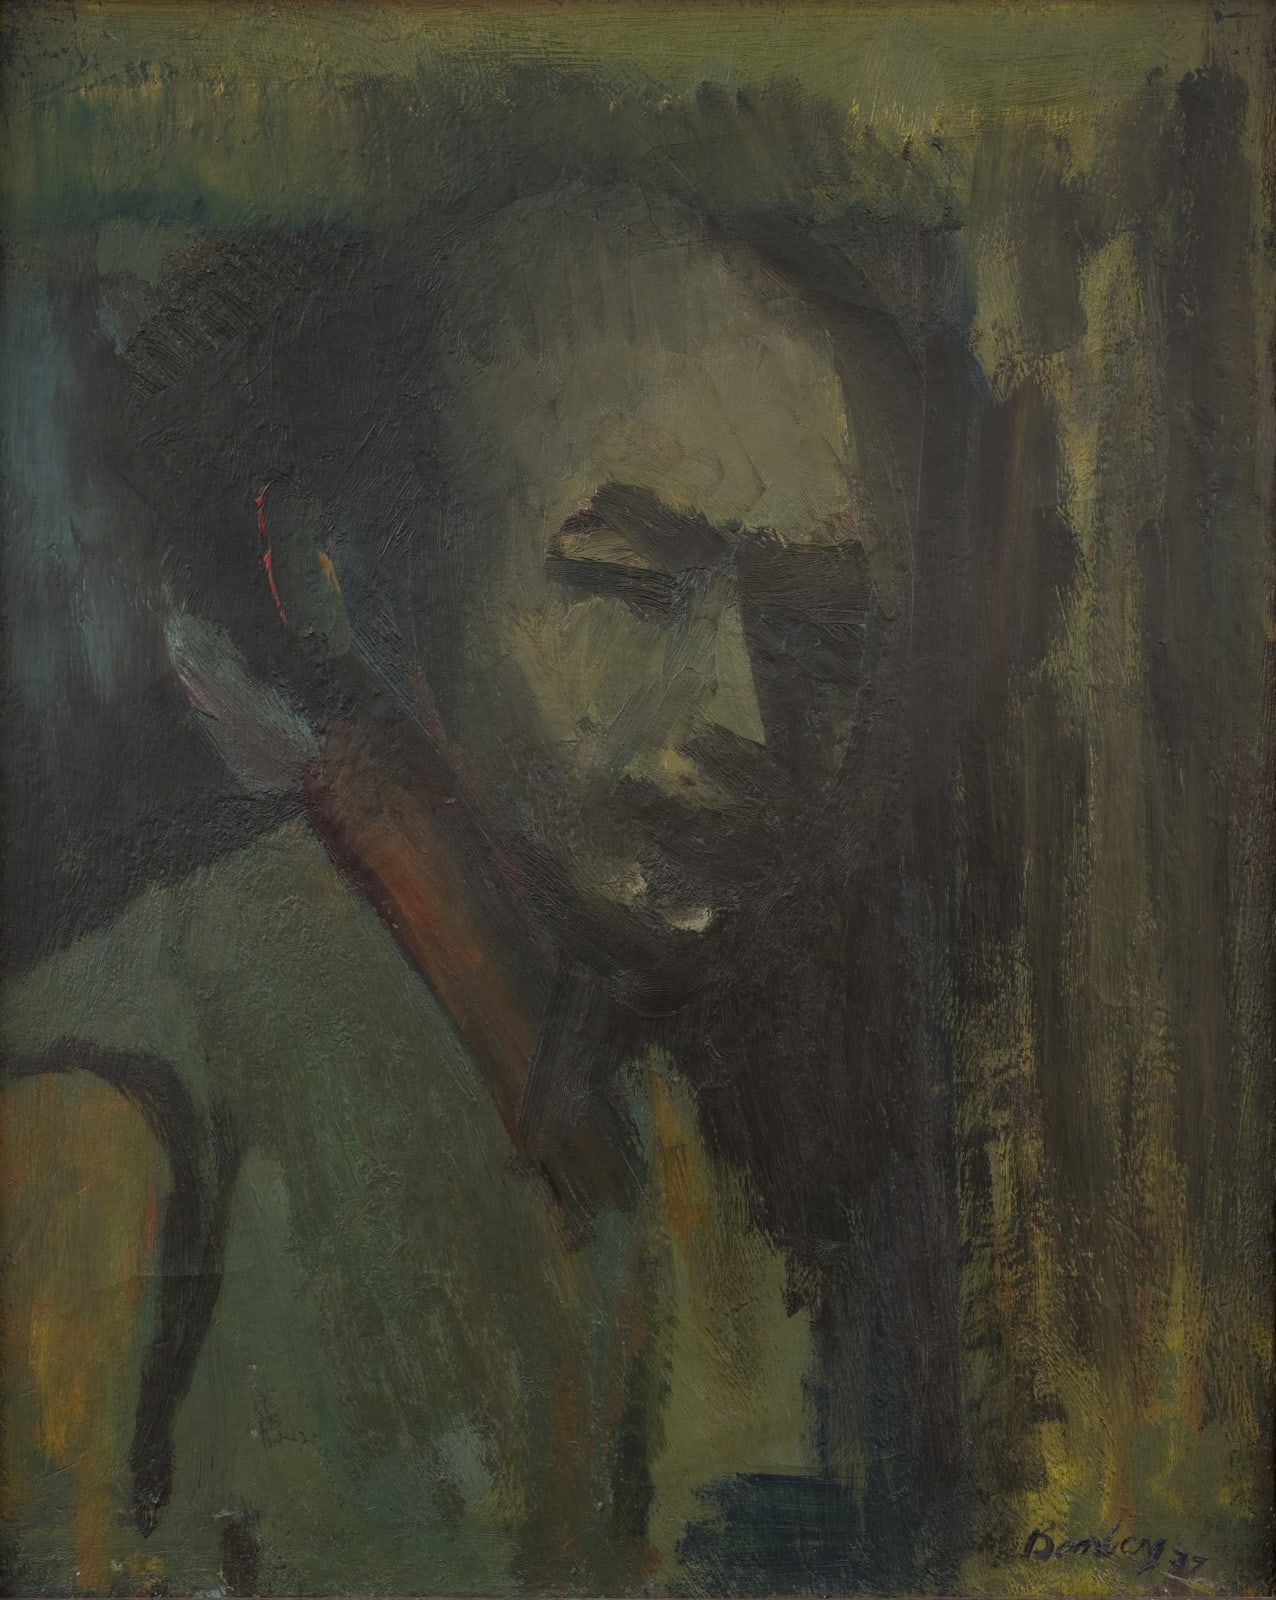 David Bomberg, Self Portrait (Green Theme), 1937